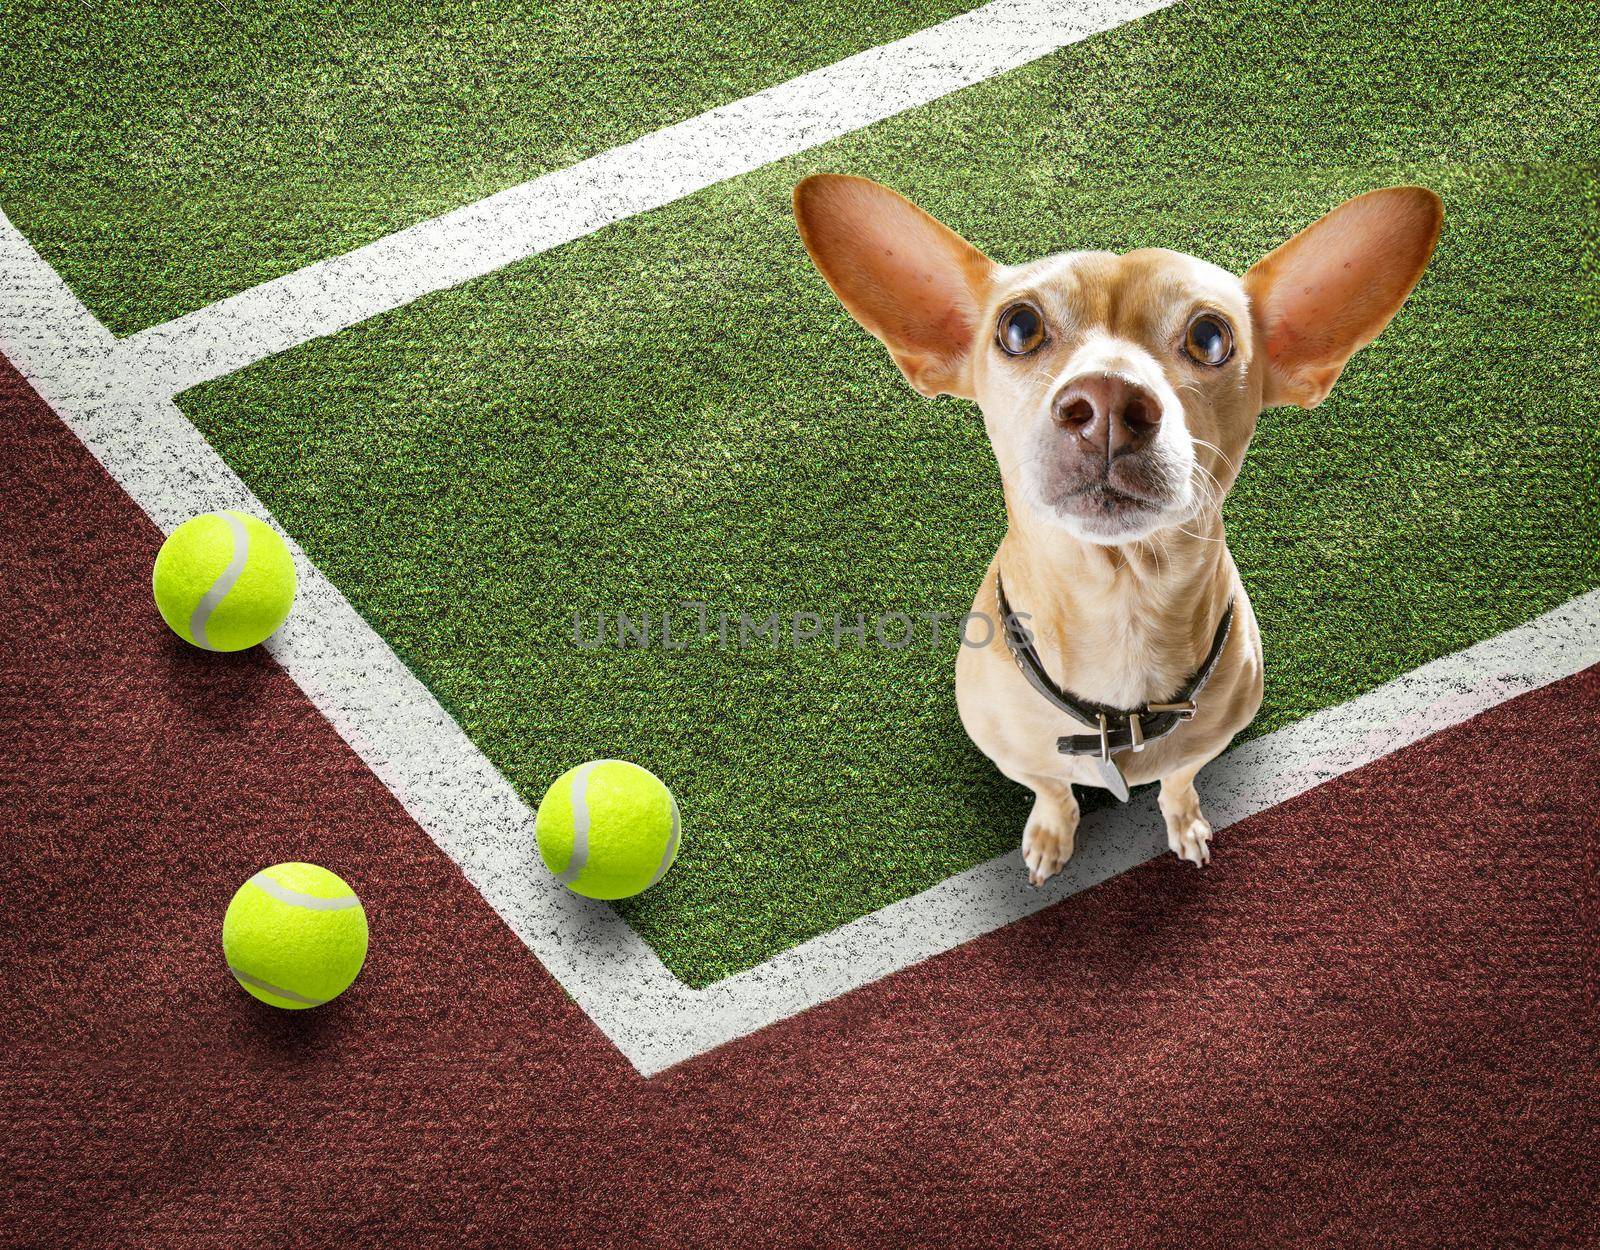 tennis player dog  by Brosch